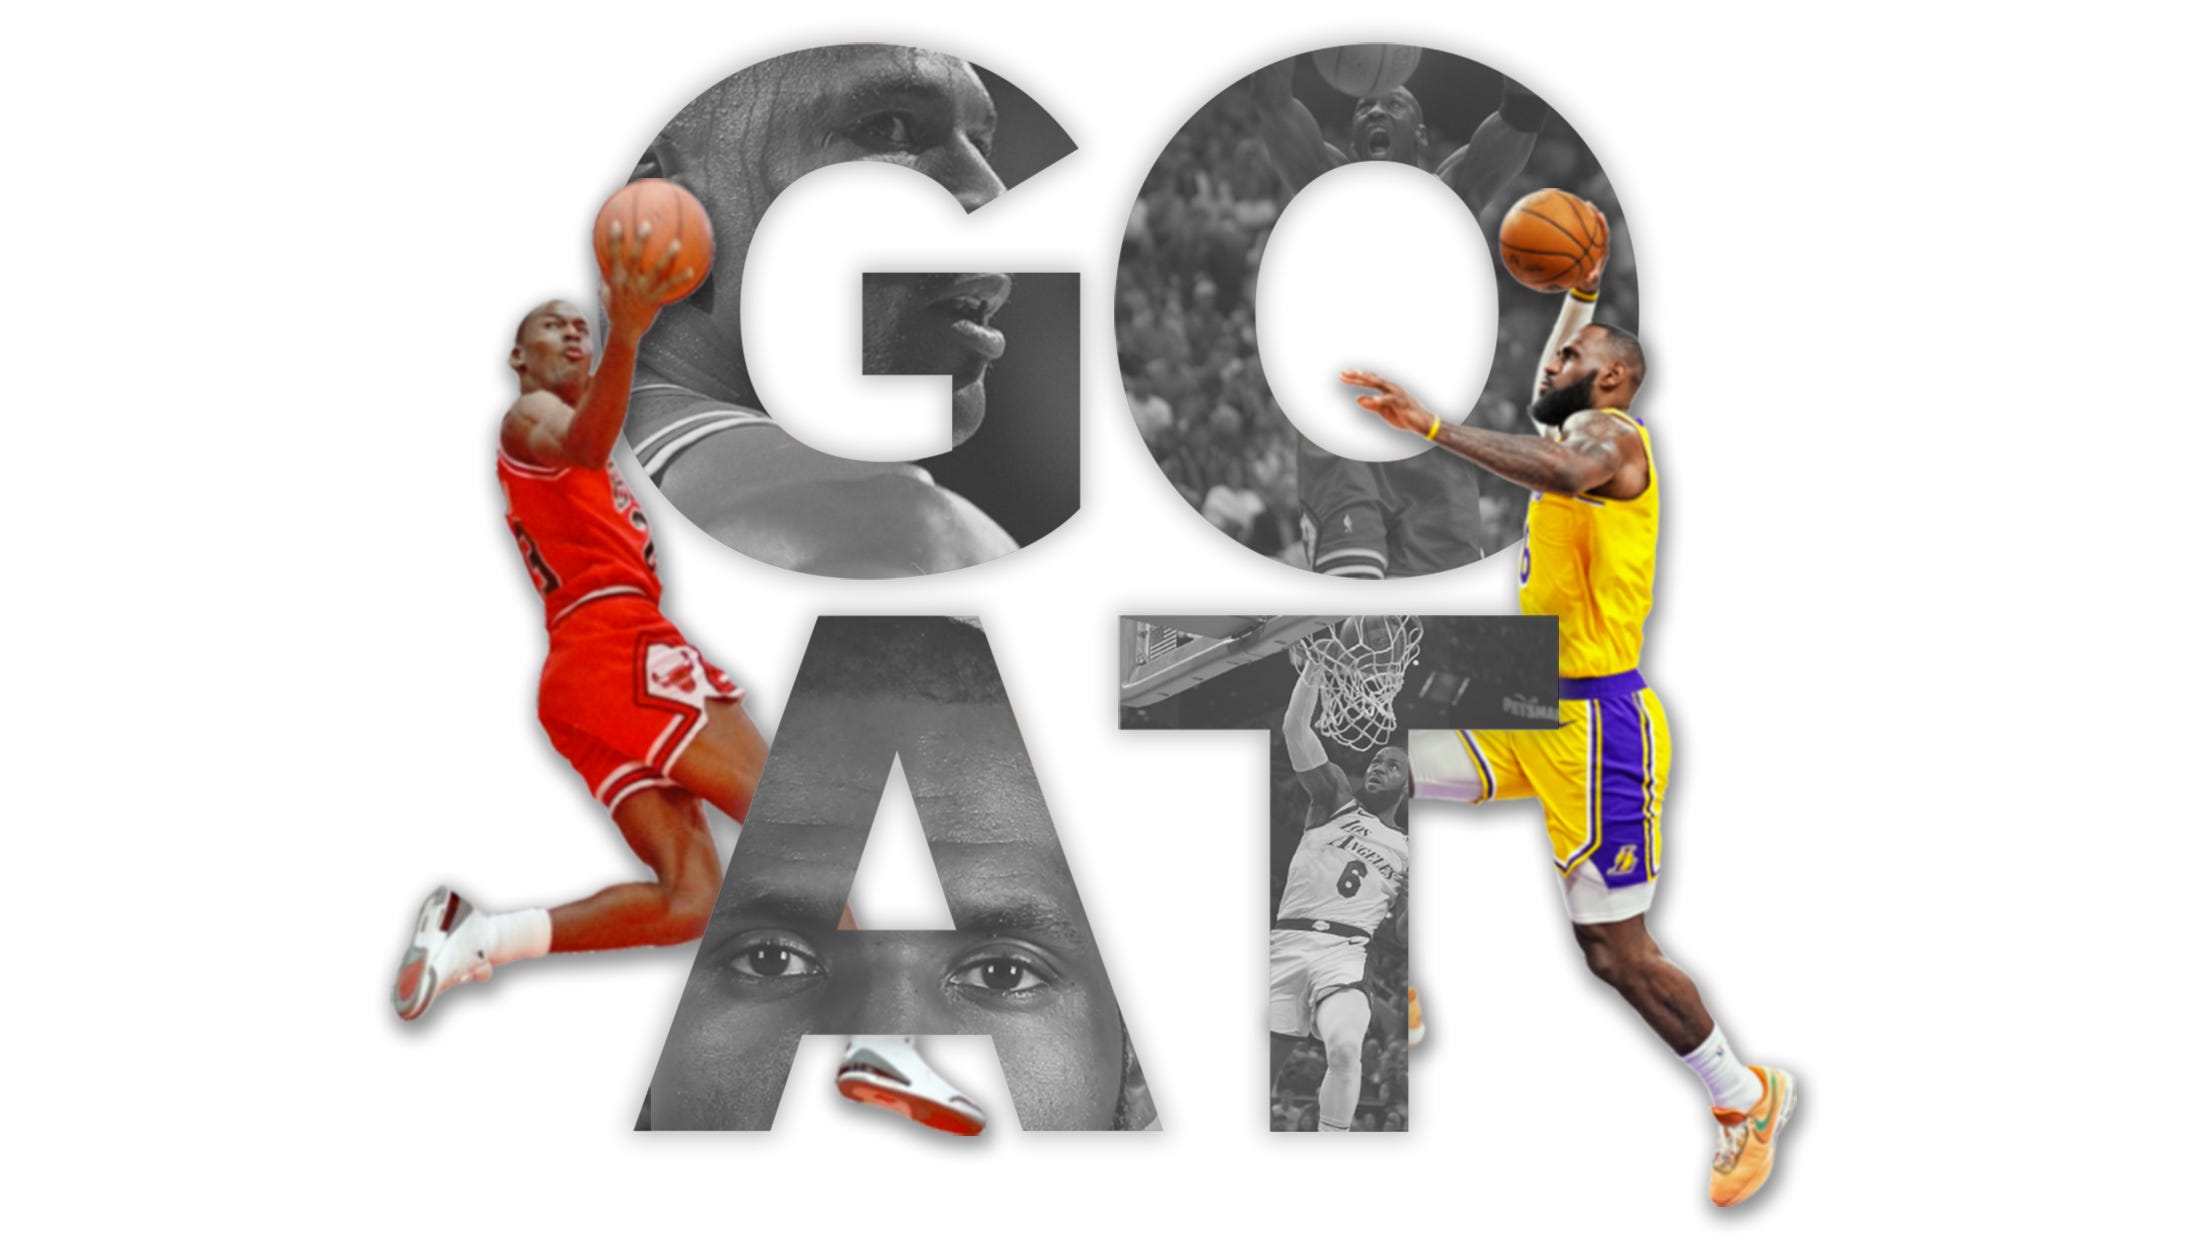 Michael Jordan's rings and his path to GOAT status: Ranking his 6